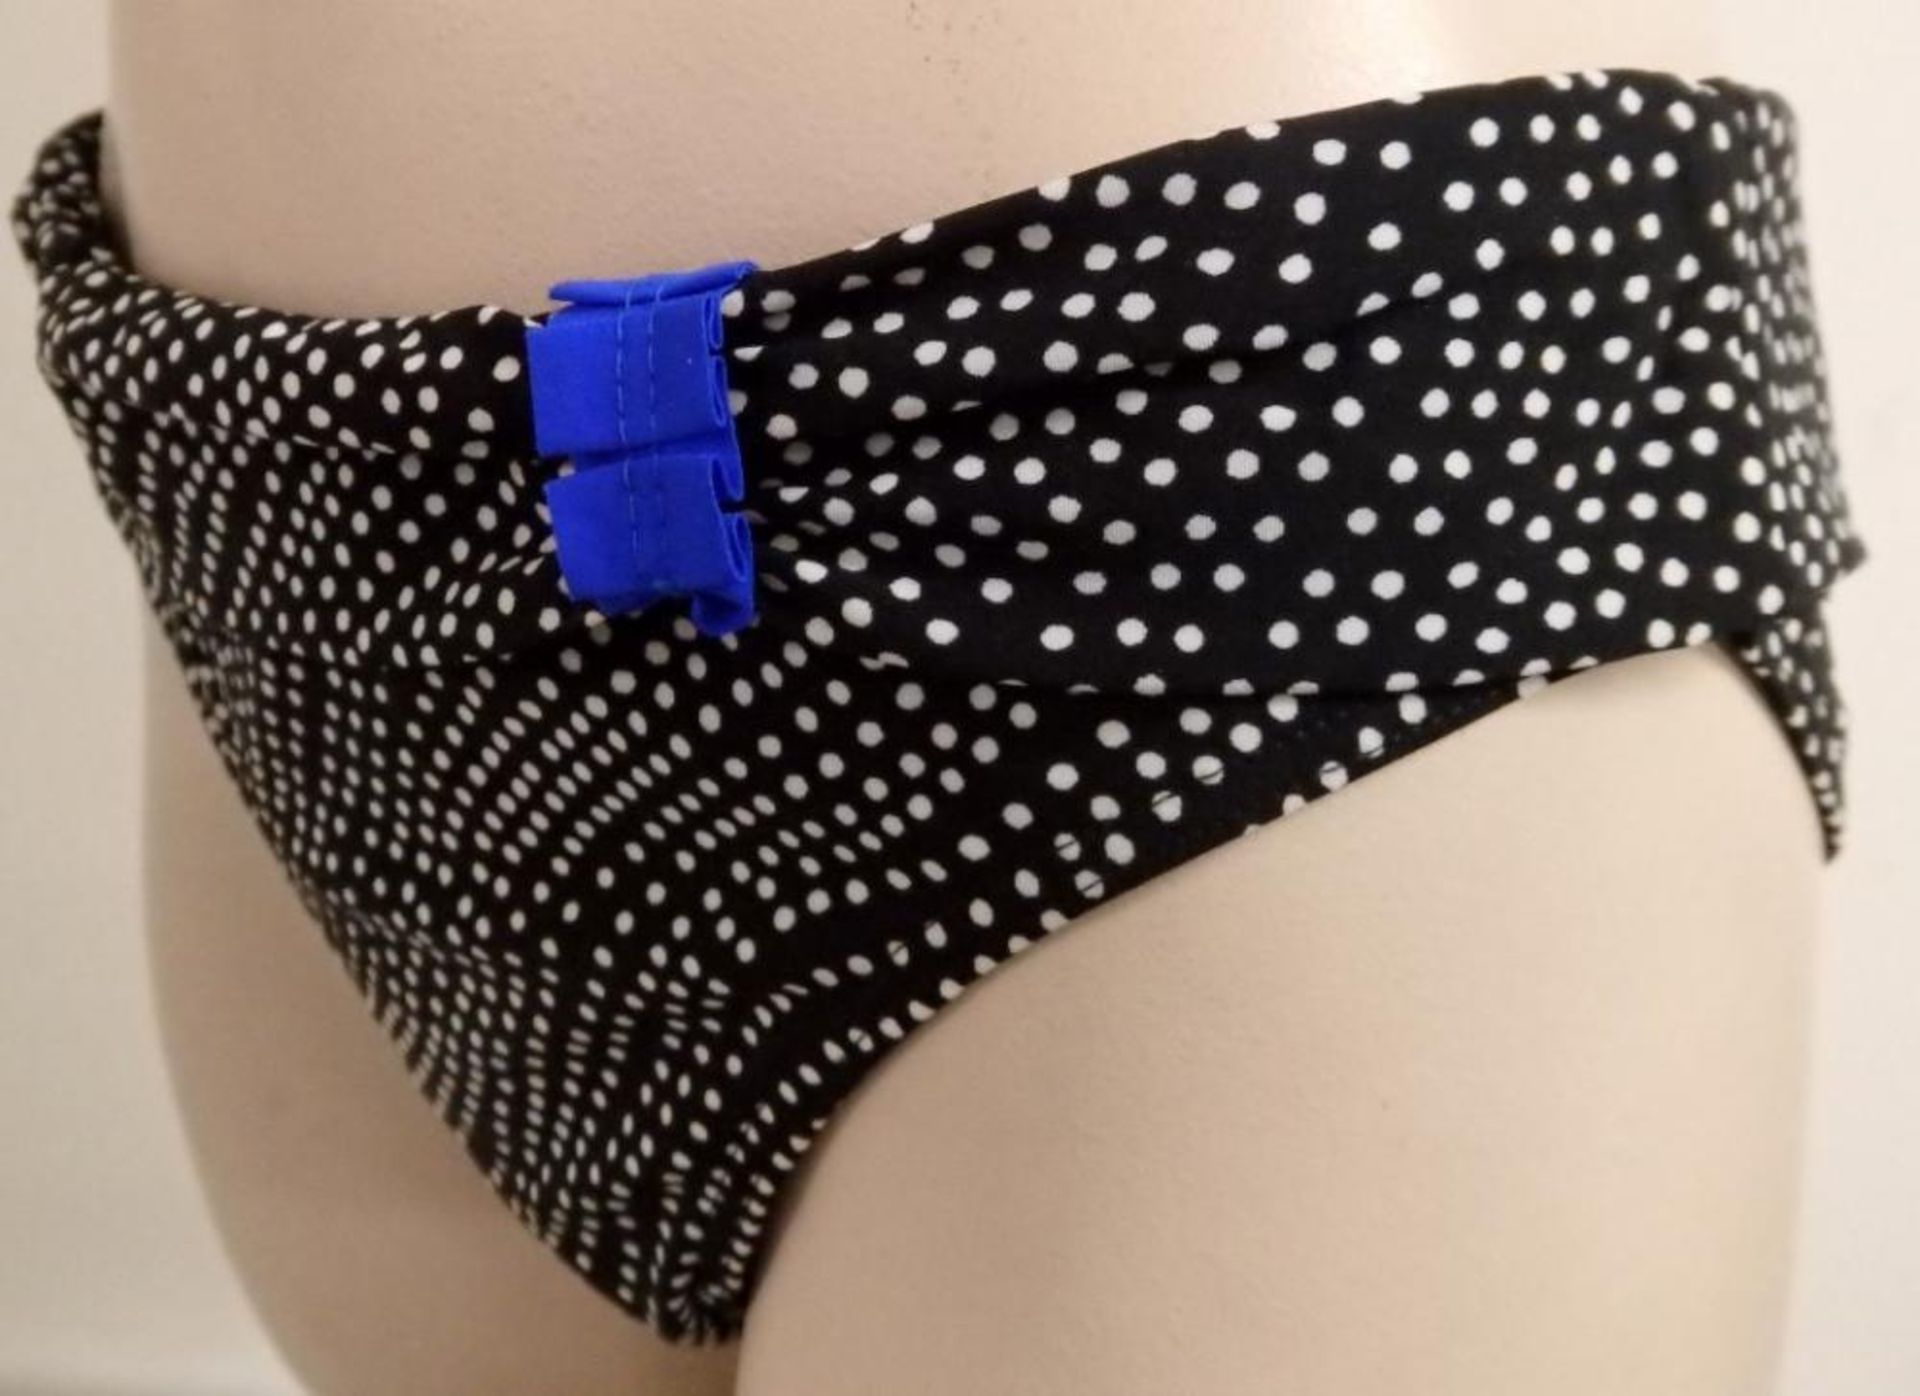 1 x Rasurel - Black Polka dot with royal blue trim &frill Tobago Bikini - B21068 - Size 2C - UK 32 - - Image 9 of 10